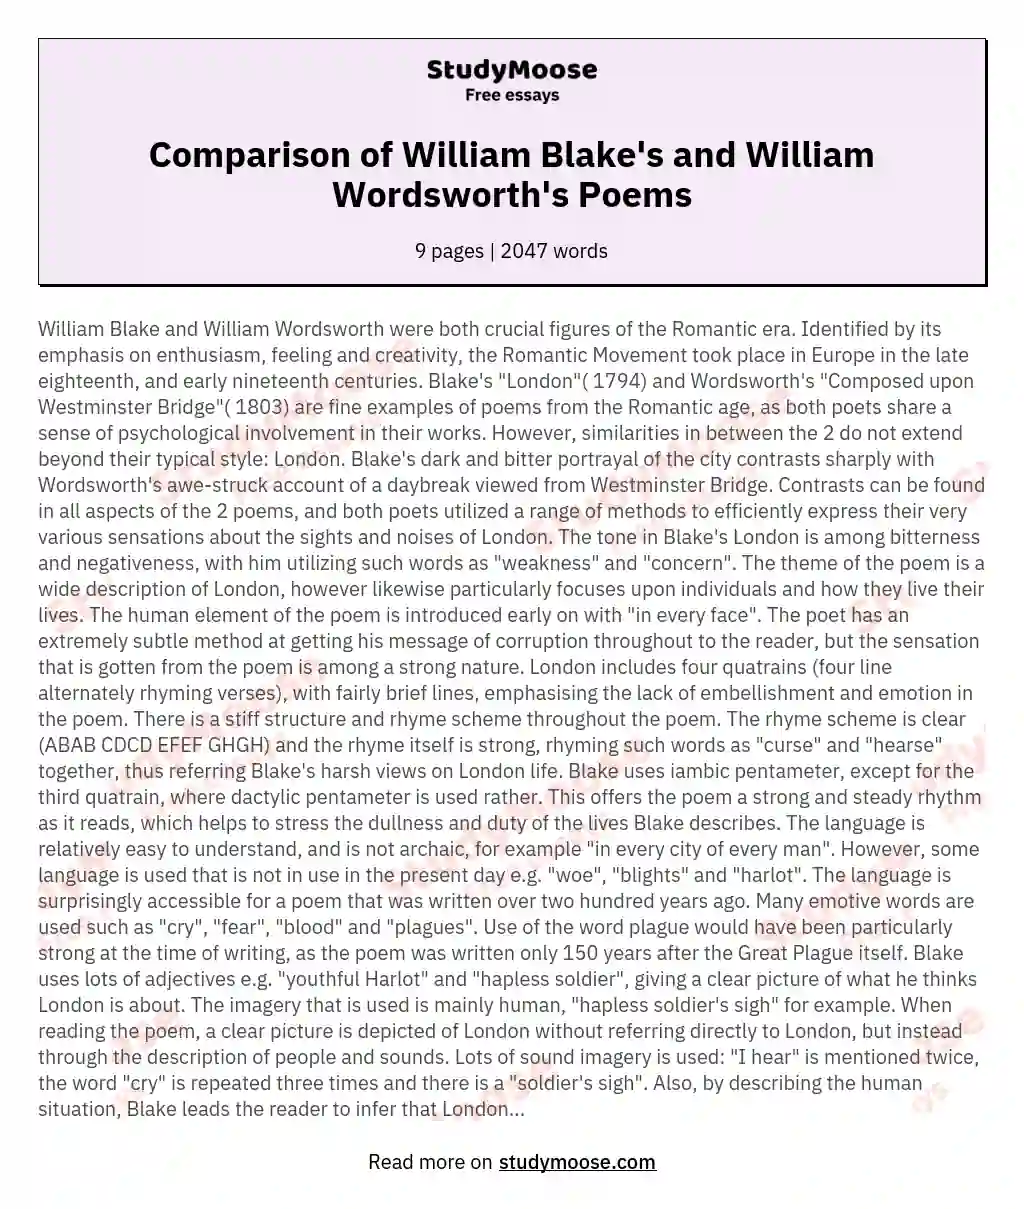 Comparison of William Blake's and William Wordsworth's Poems